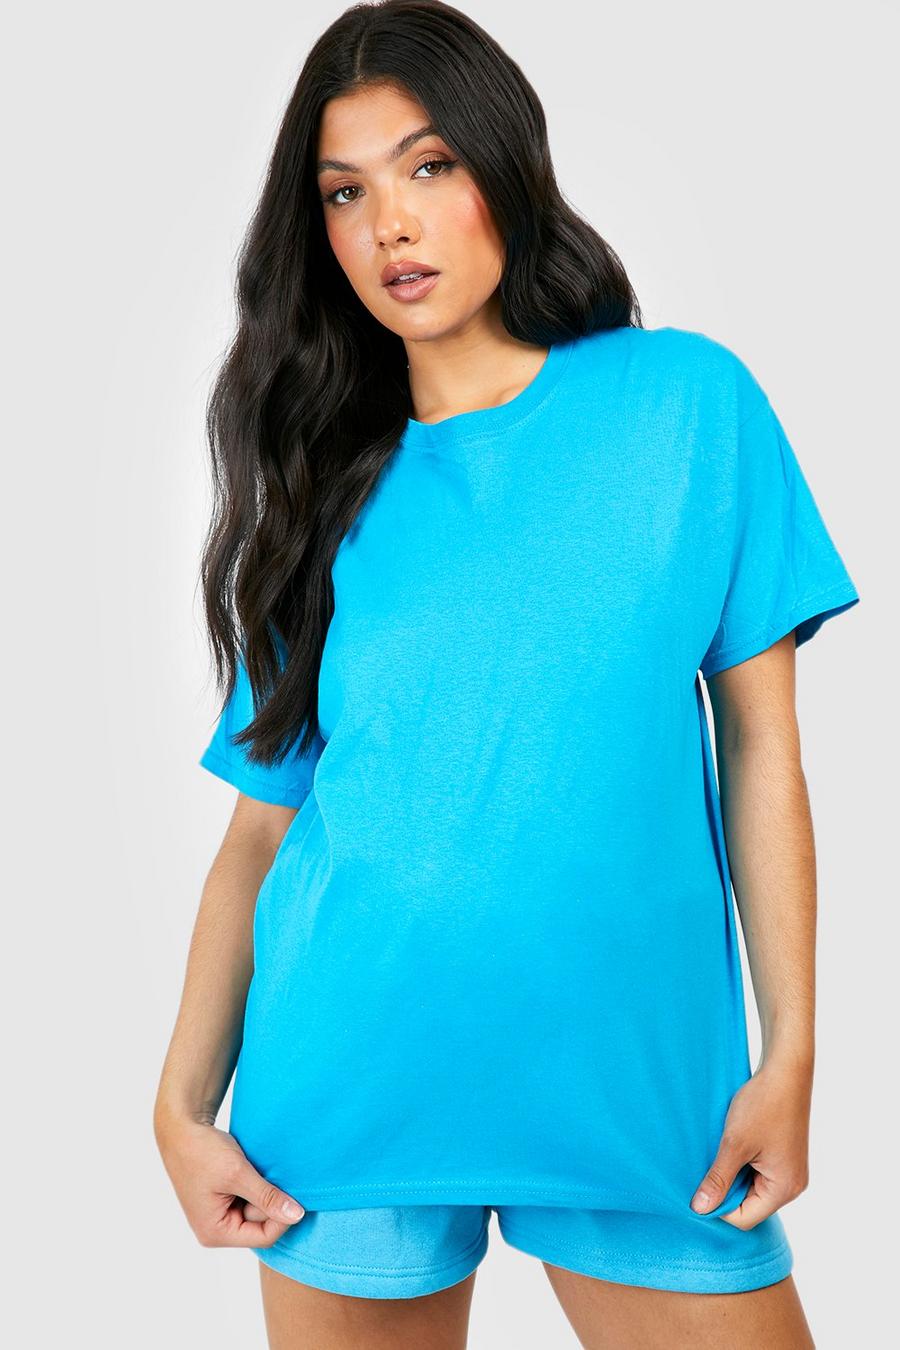 Azure blue Maternity Cotton T-Shirt